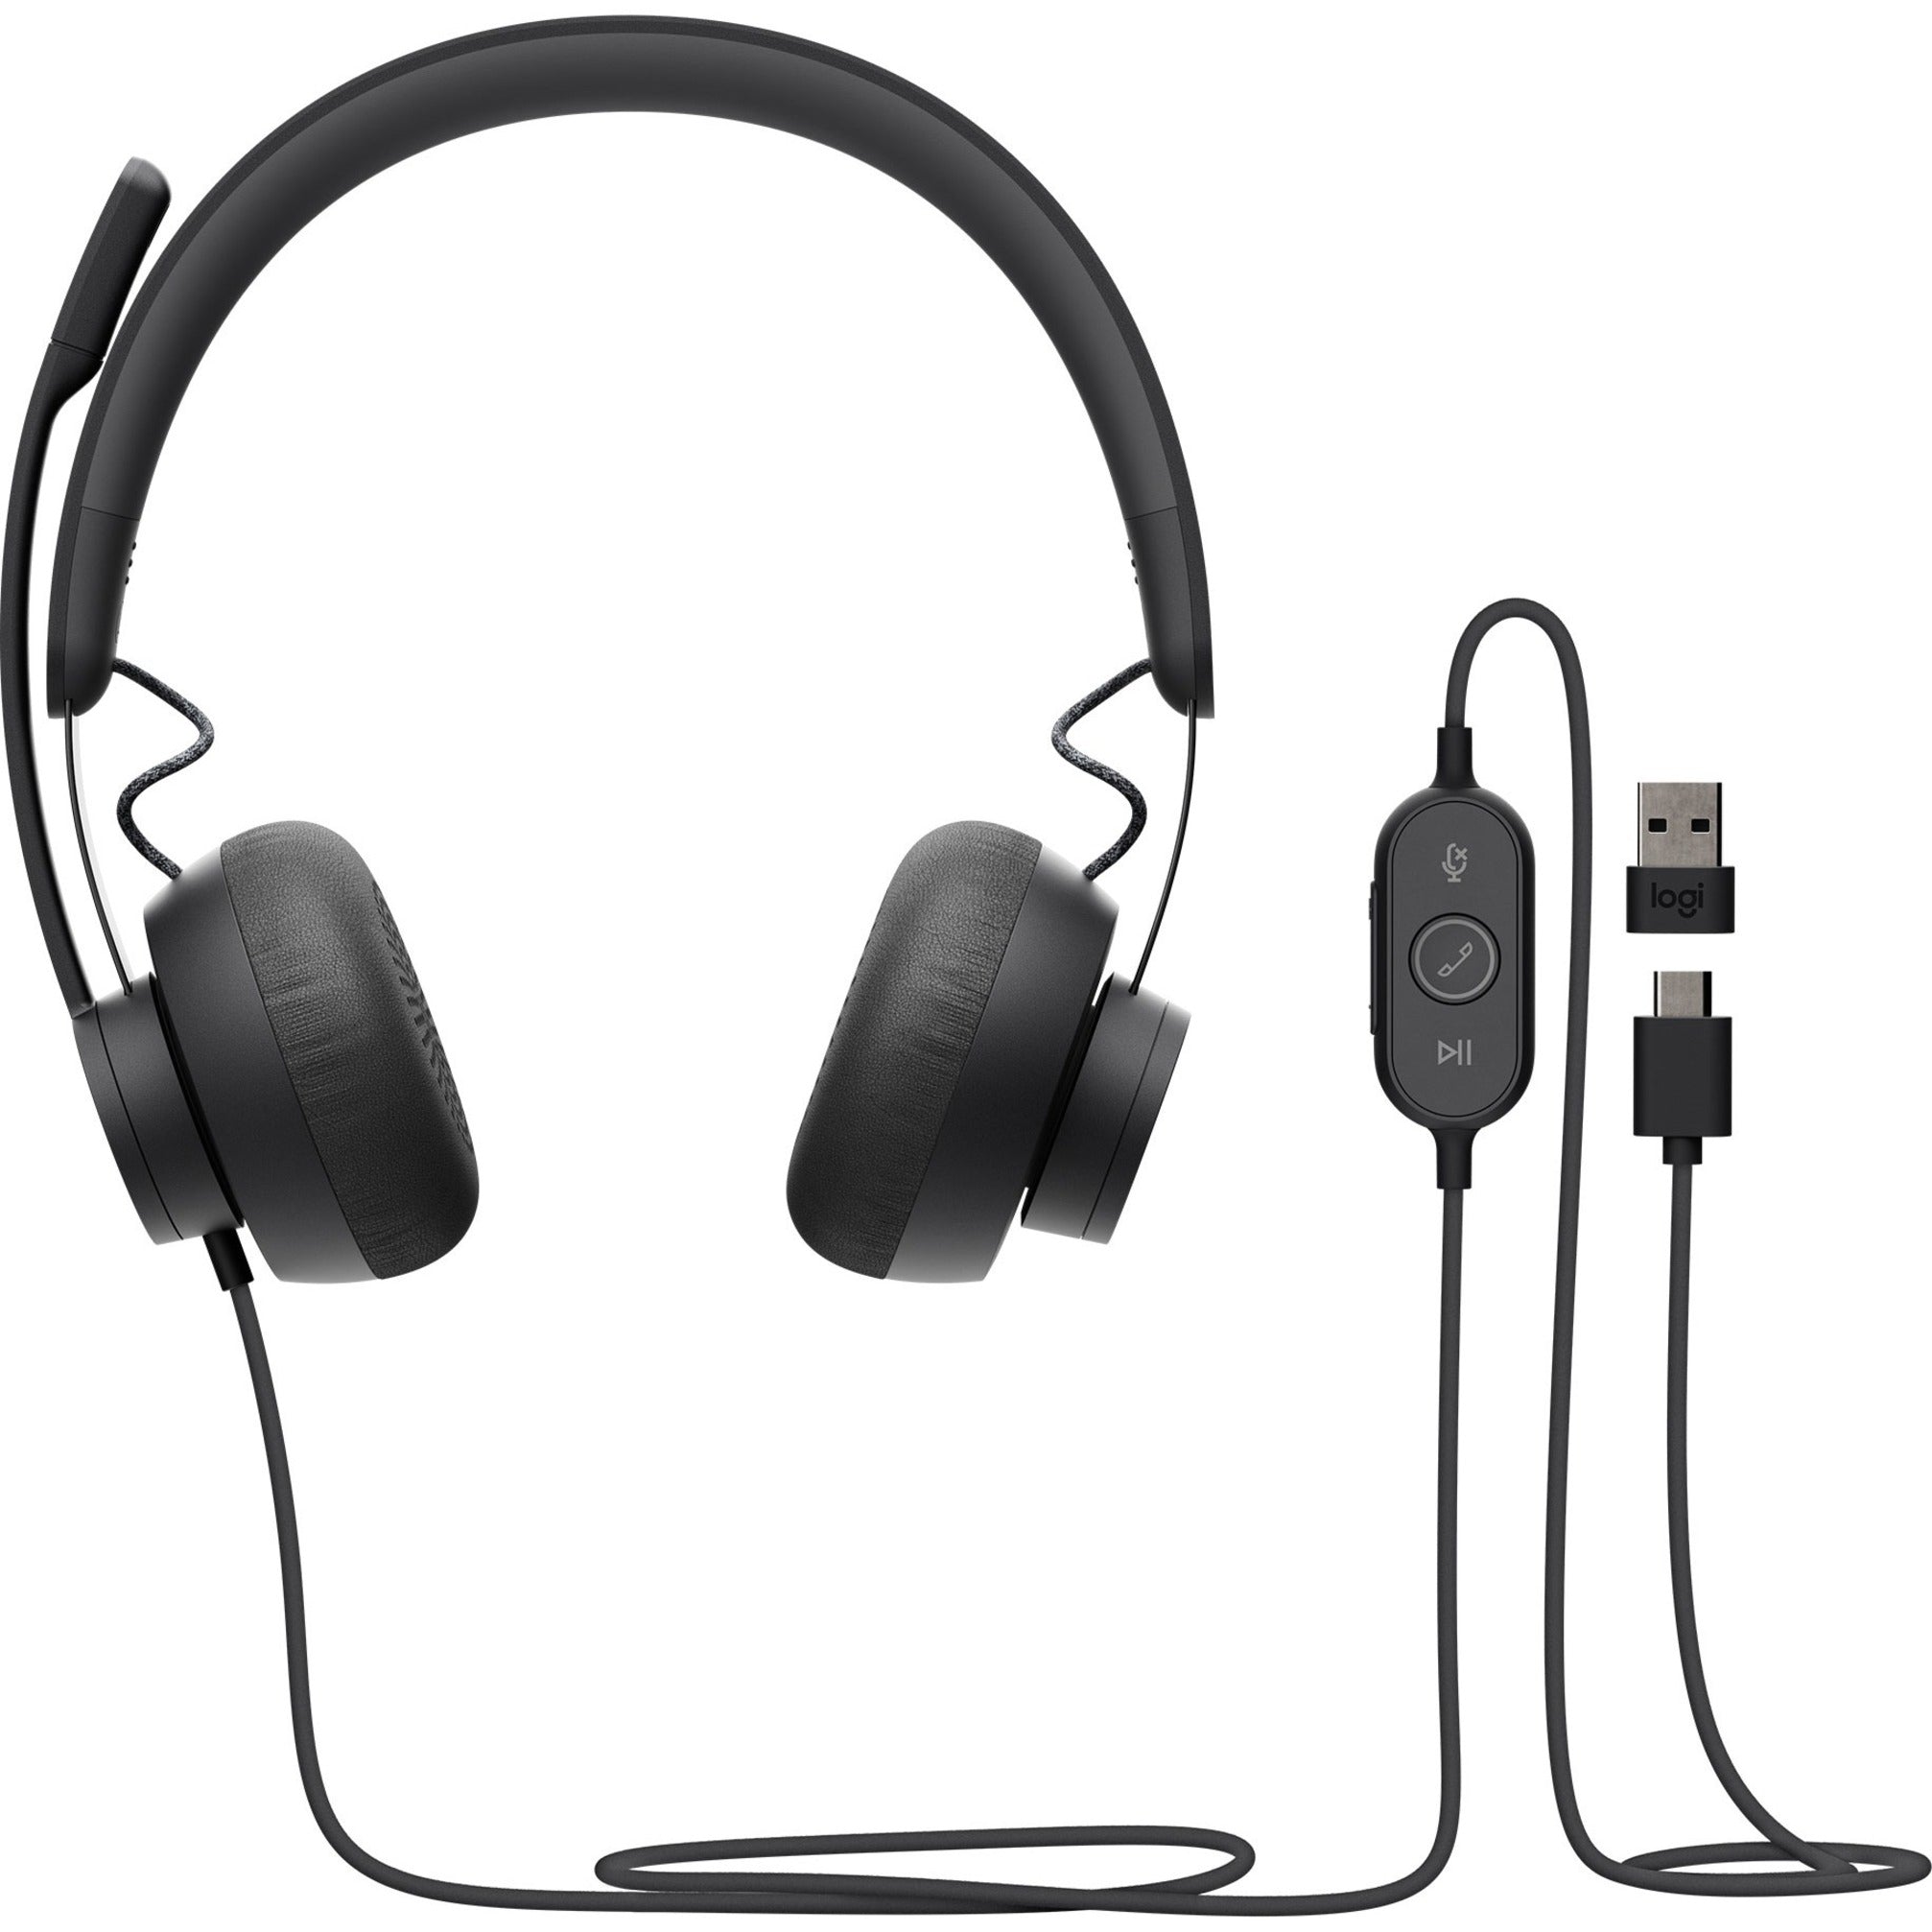 Logitech 981-001103 Zone 750 Headset, Wired Noise Canceling Over-Ear Headset - Black